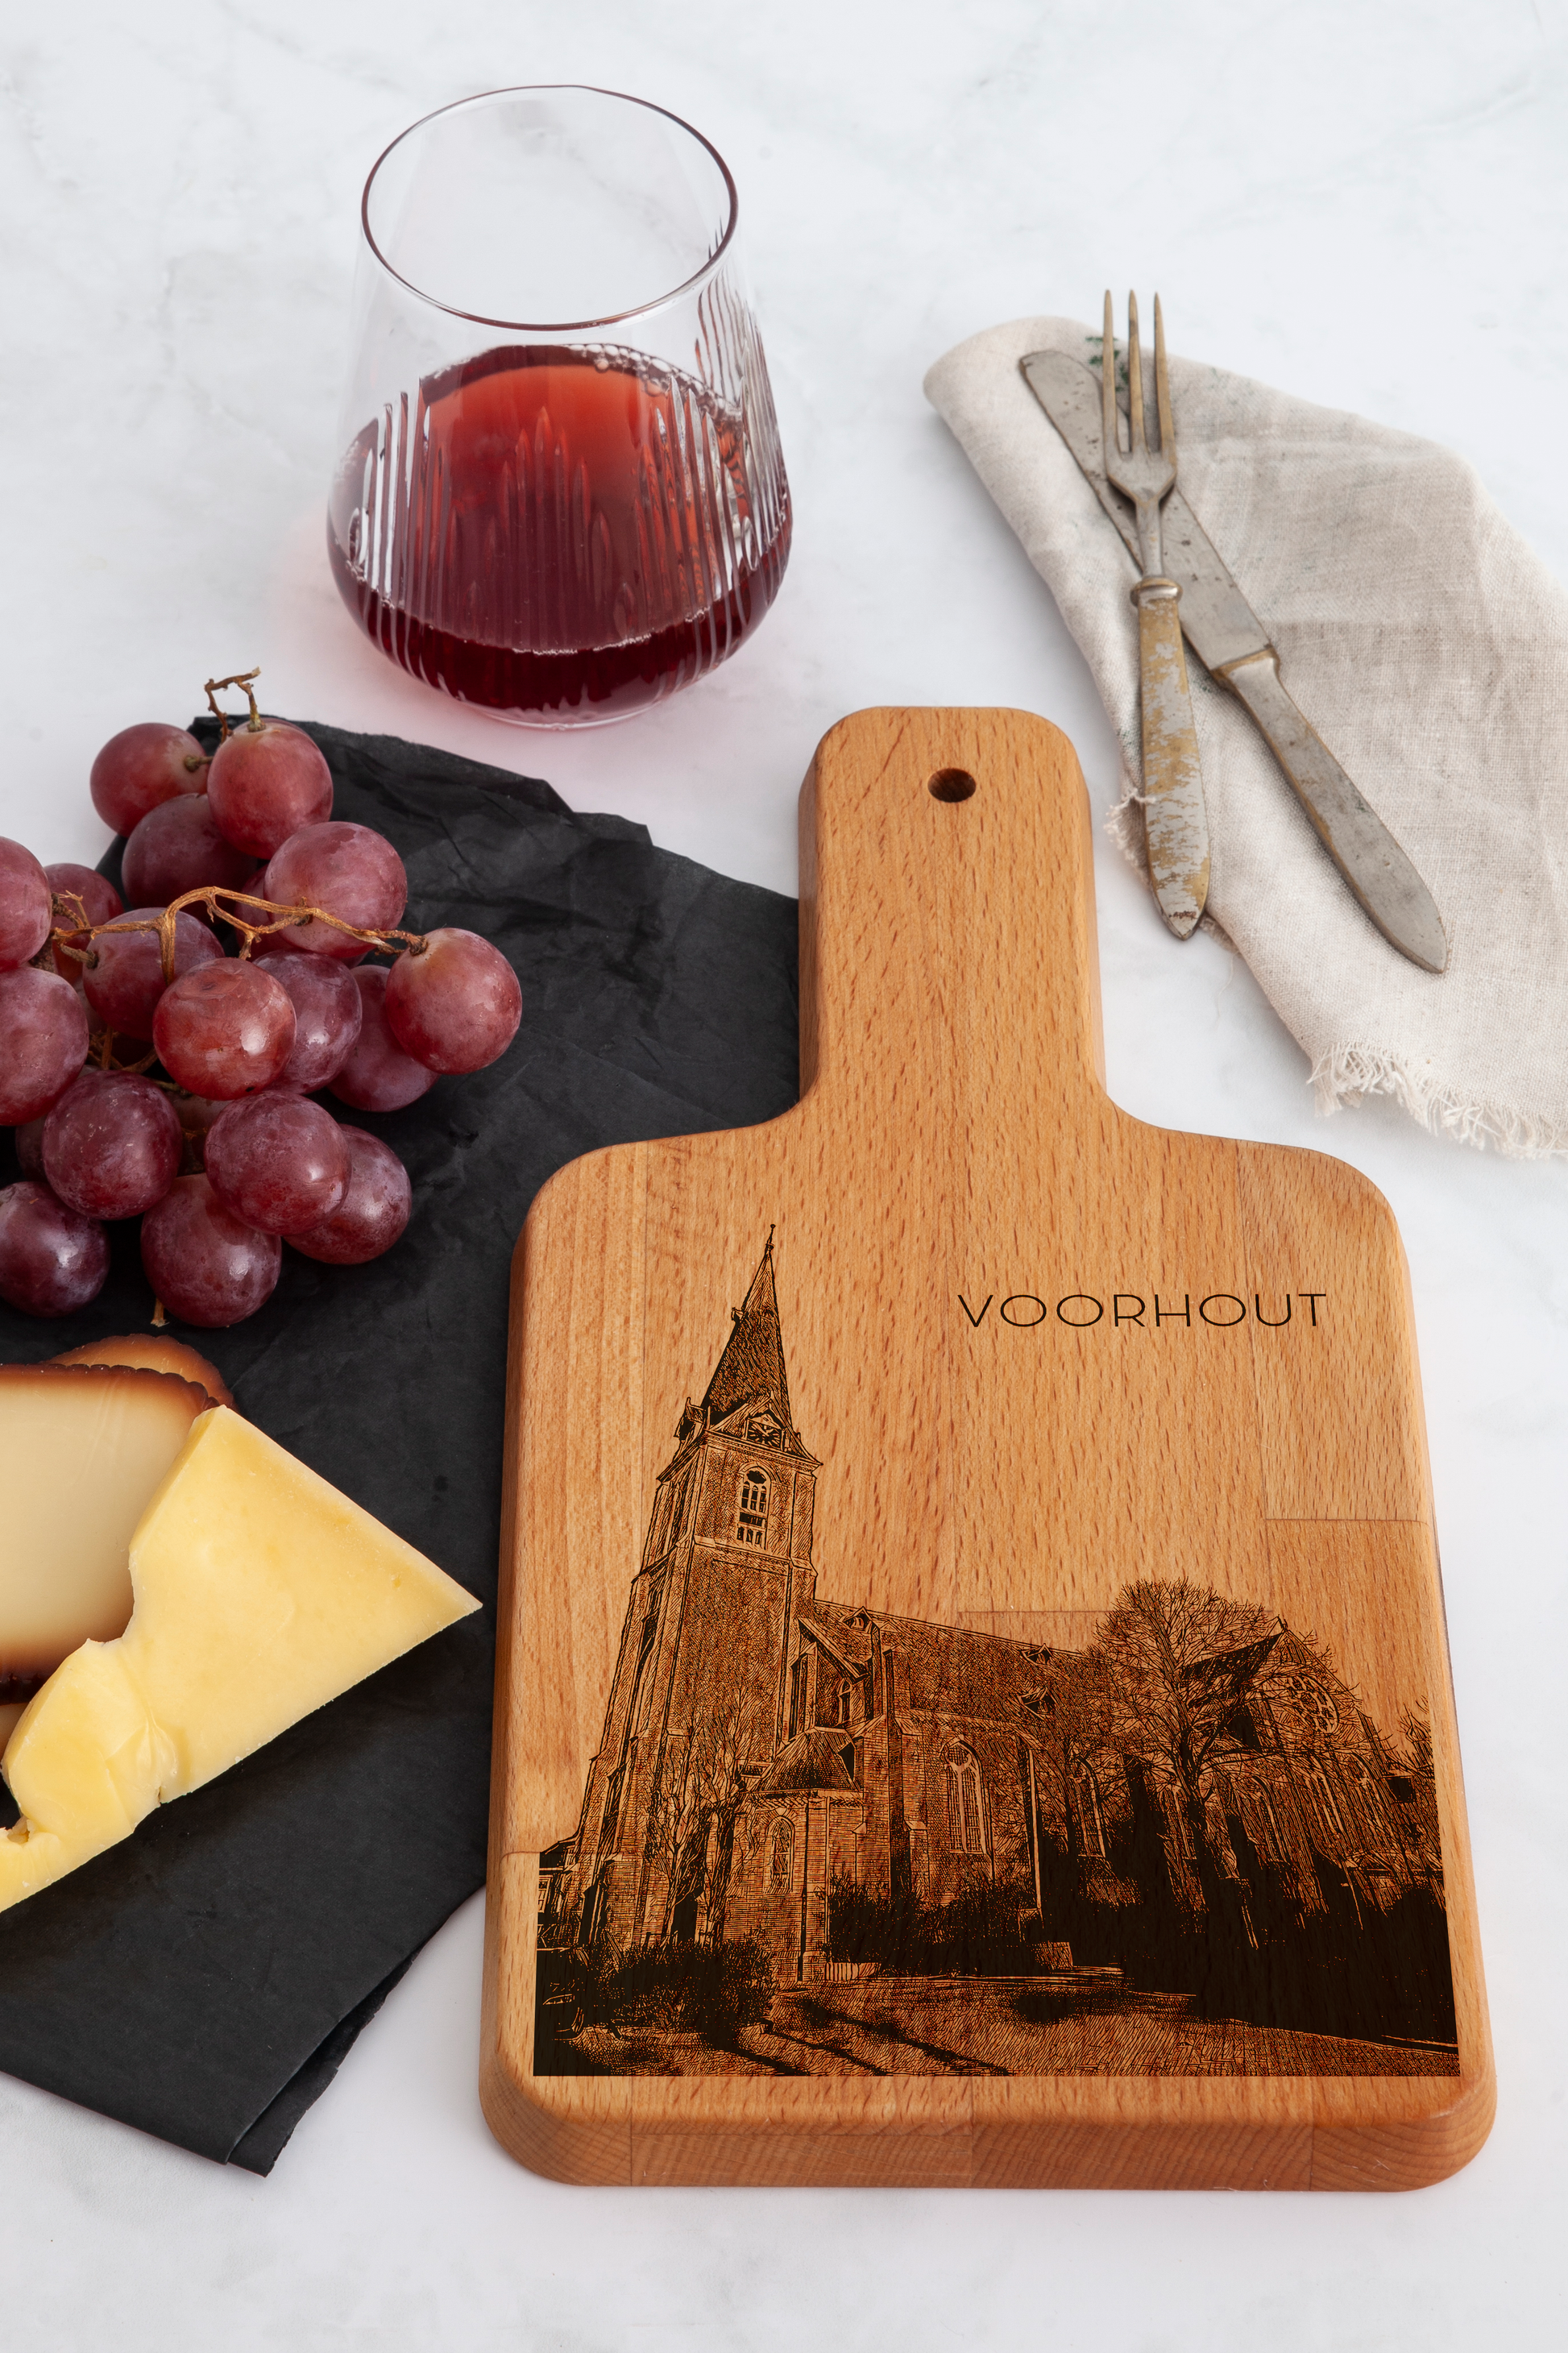 Voorhout, De Sint Bartholomeuskerk, cheese board, on countertop